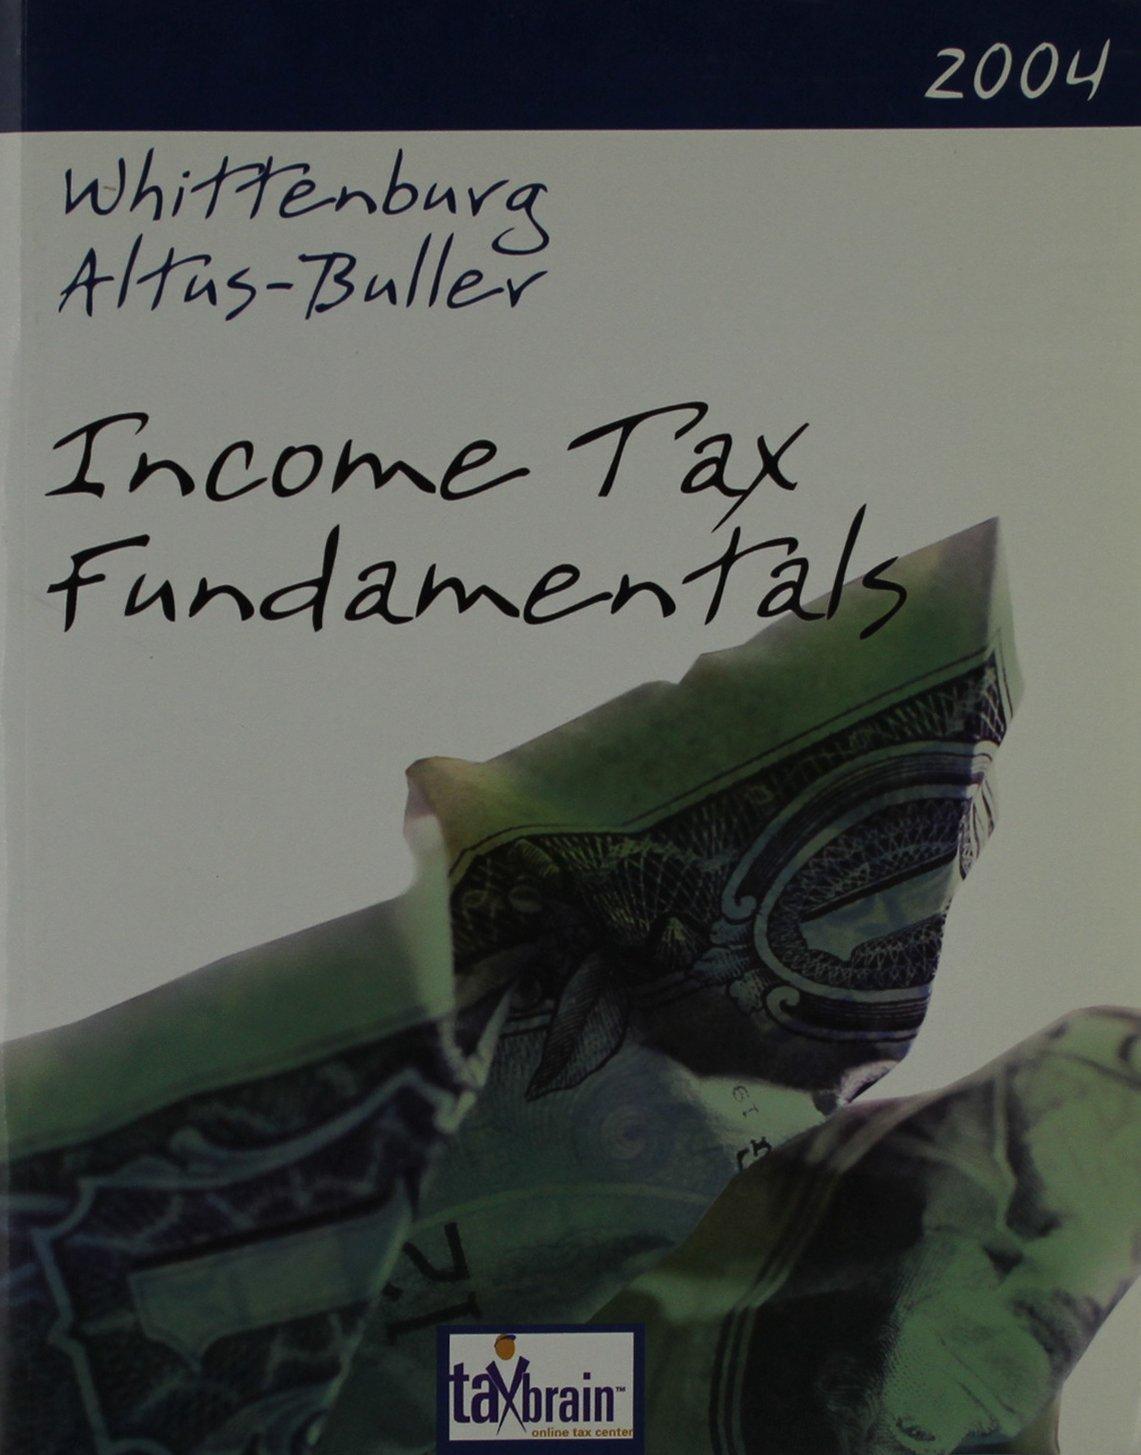 income tax fundamentals 2004 22nd edition gerald e. whittenburg, martha altus buller 032418851x, 9780324188516